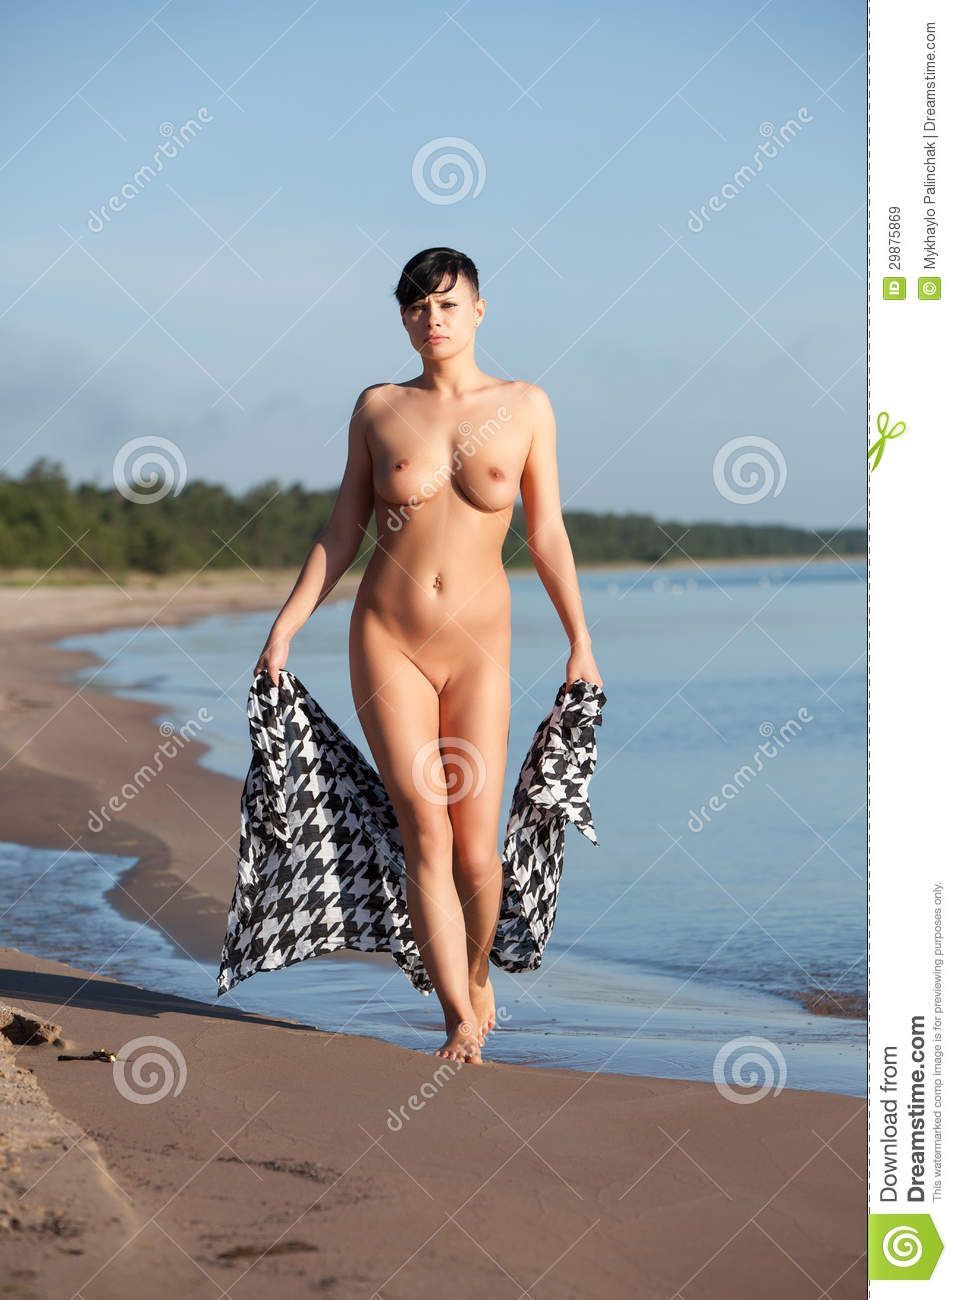 Beach free naked woman